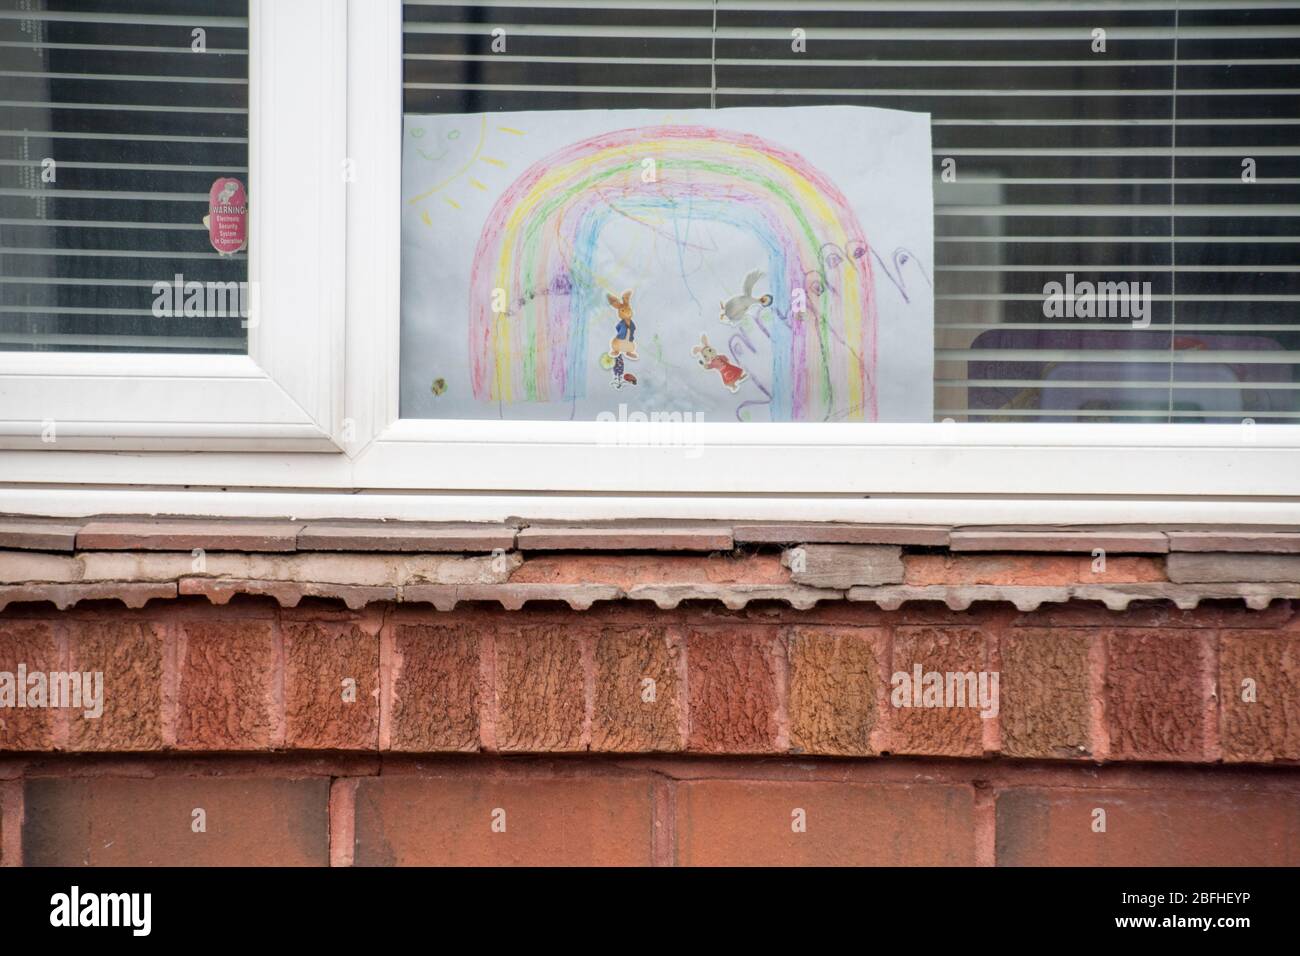 Sheffield Reino Unido – Abril 09 2020: S dibujo descolorido de un arco iris en la ventana durante la pandemia del coronavirus Covid-19 en 34 Fishponds Road, Sheff Foto de stock